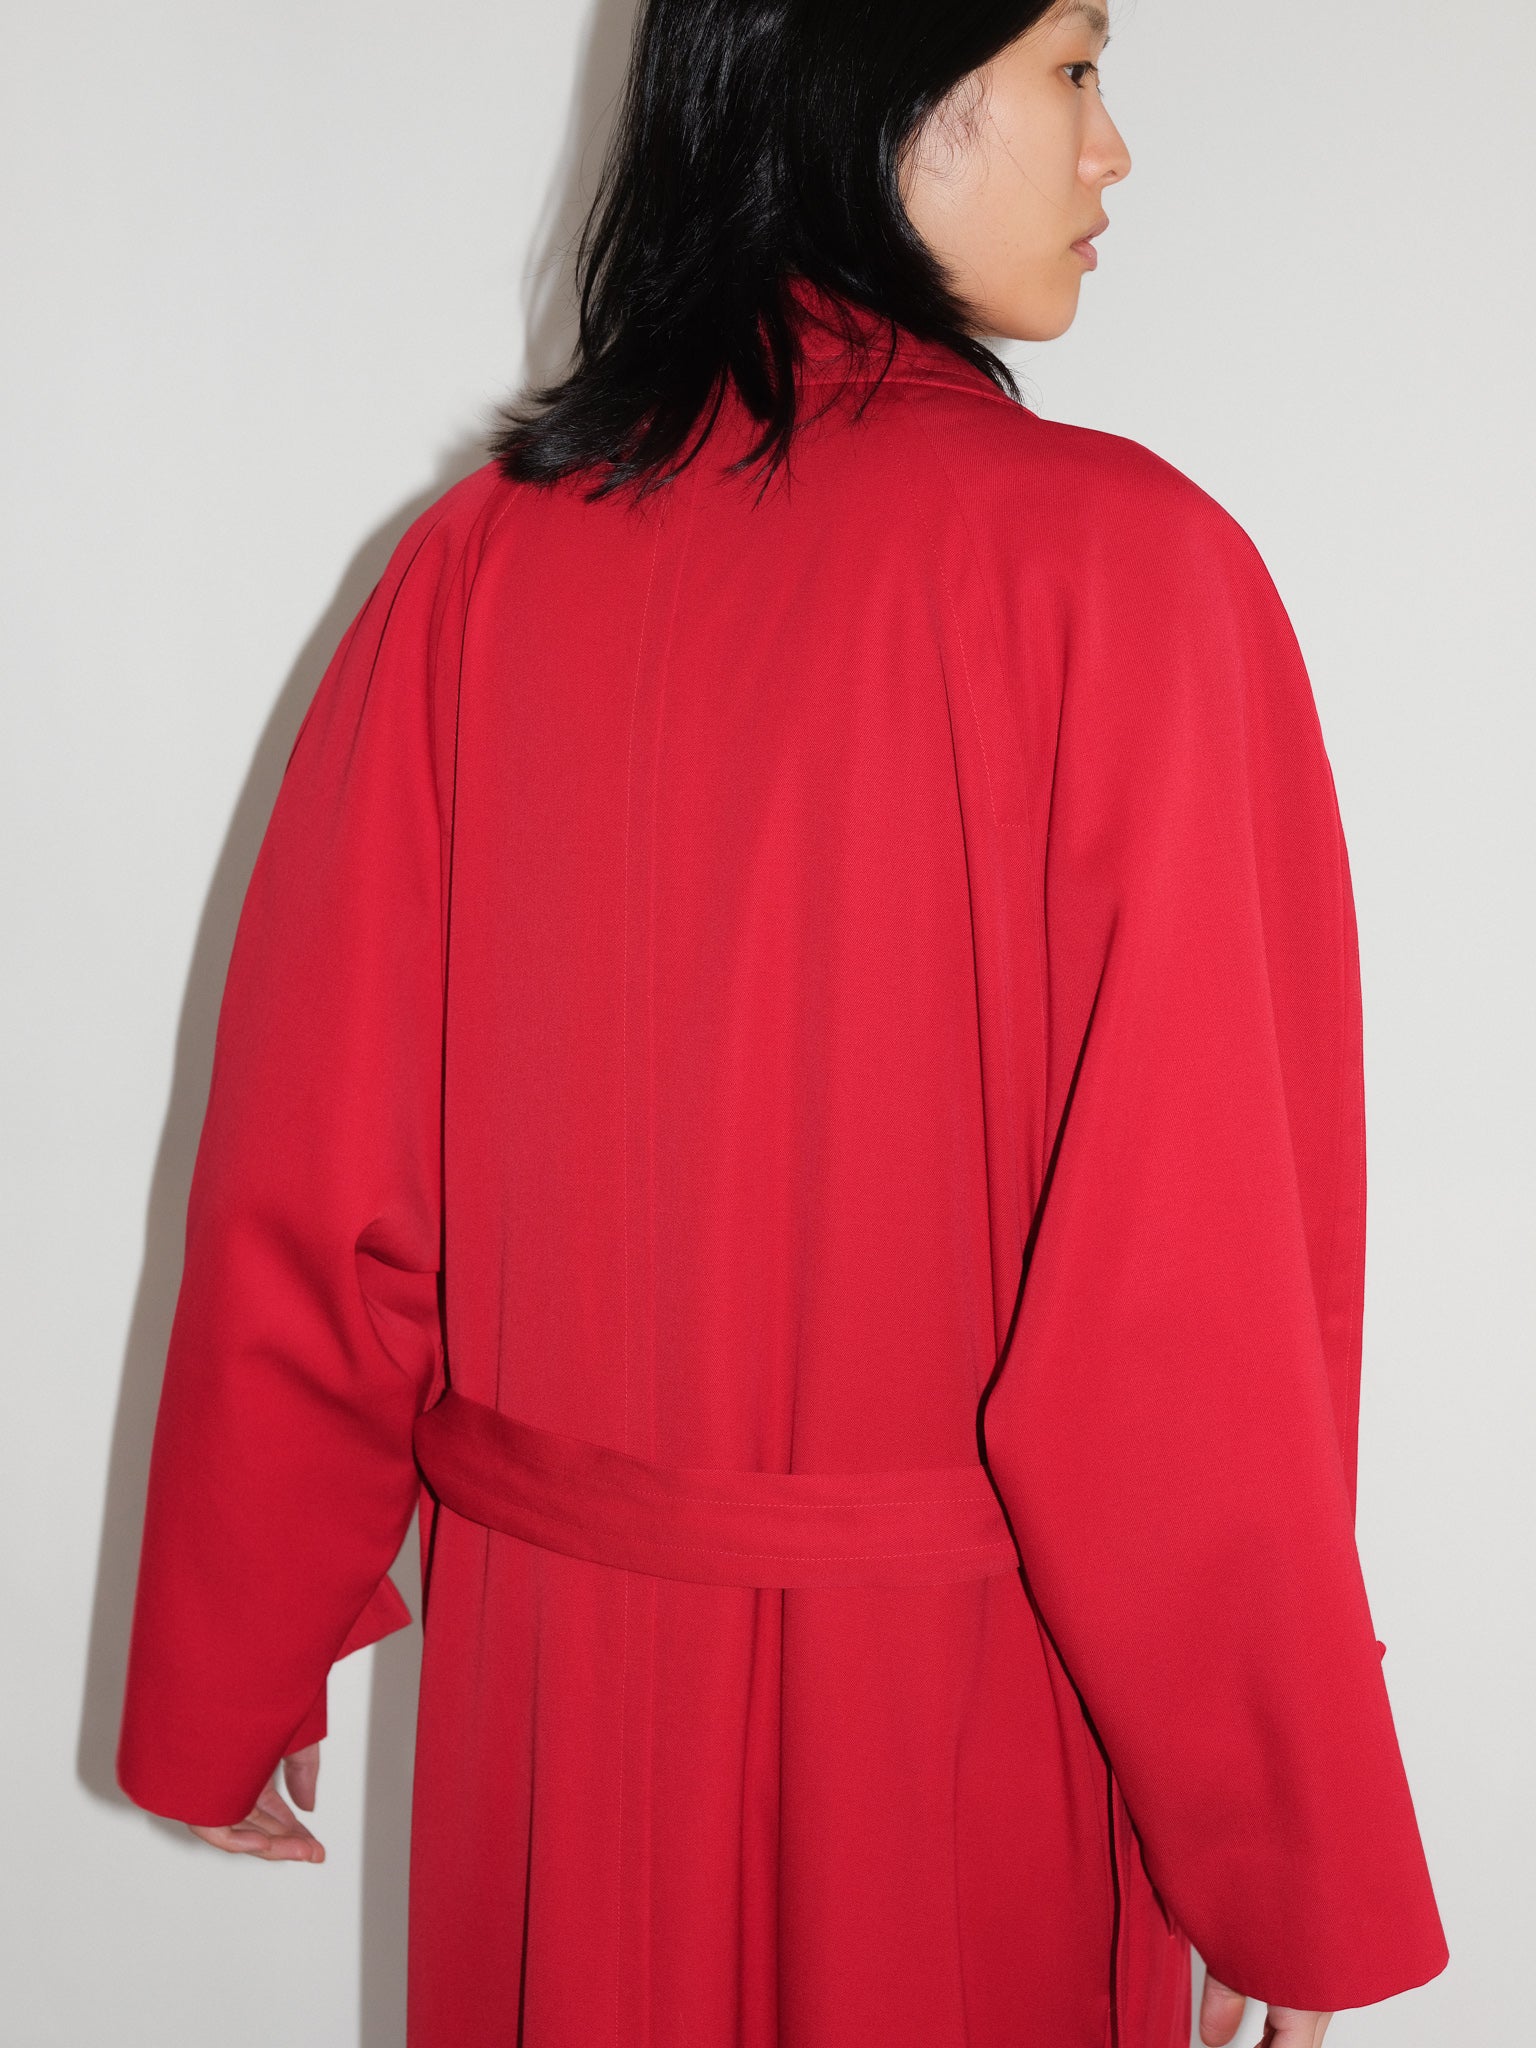 Yves Saint Laurent wool trench coat